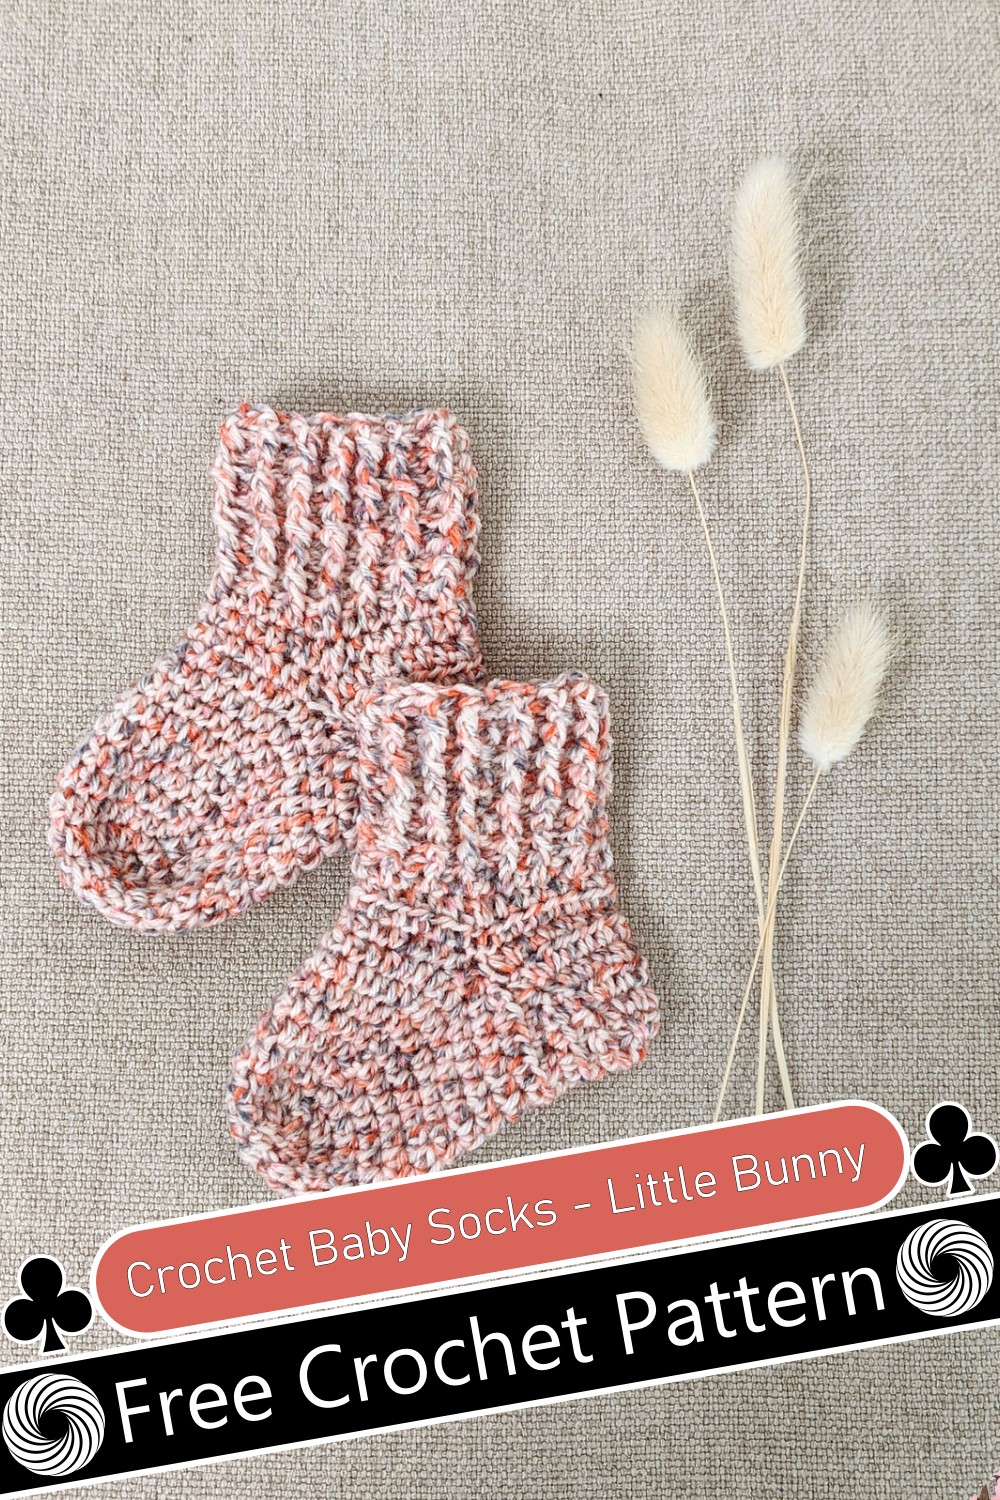 Crochet Baby Socks - Little Bunny